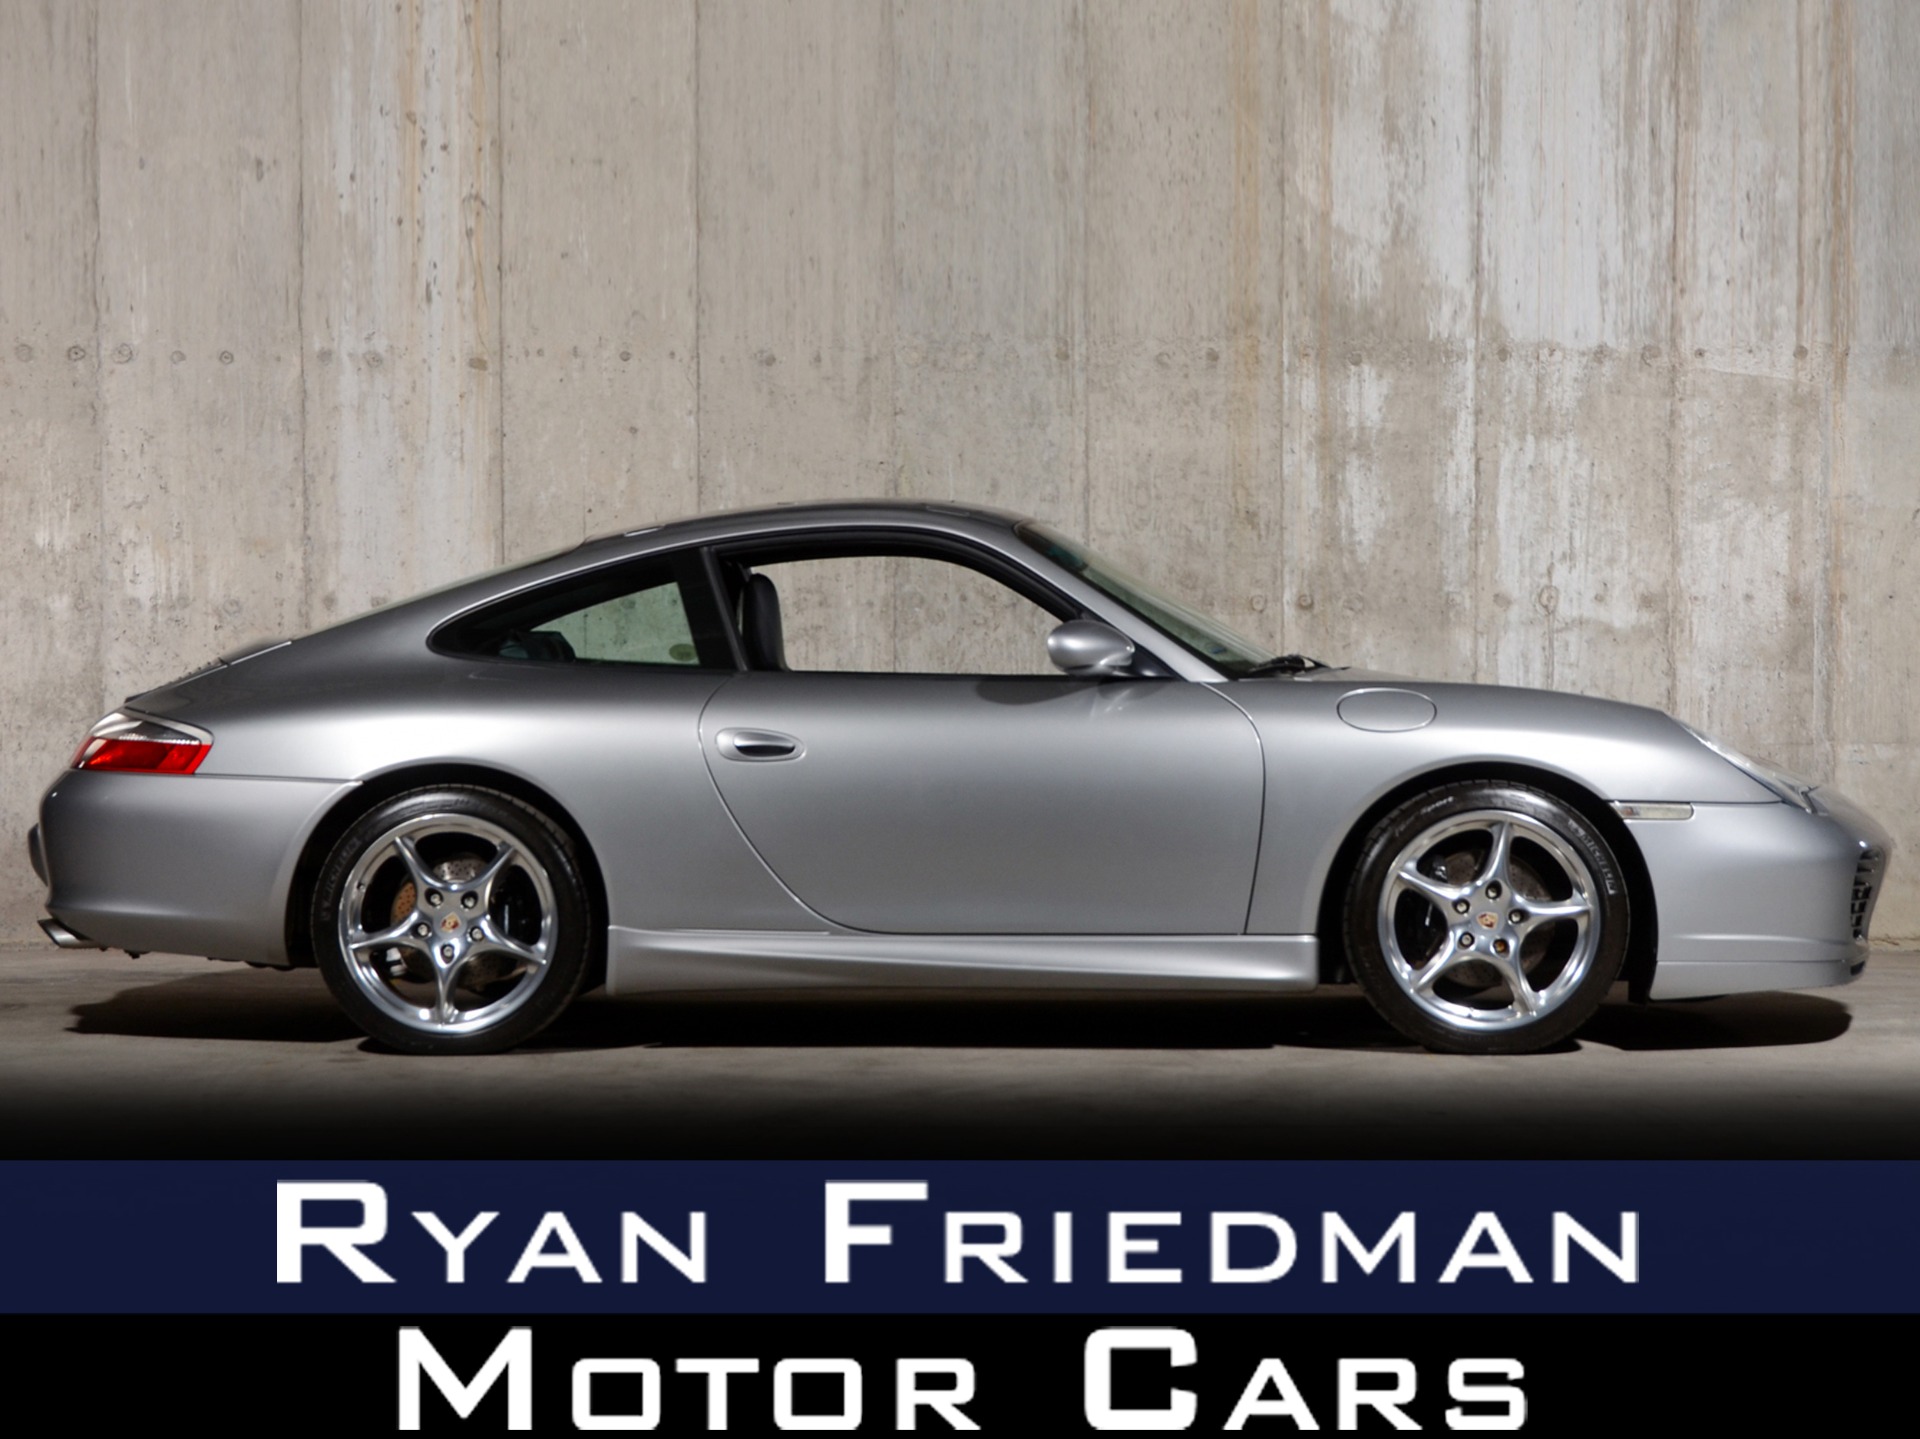 Used 2004 LLC Friedman Edition (Sold) 911 Ryan Anniversary Motor Porsche For | #1406 Cars Carrera Sale 40th Stock